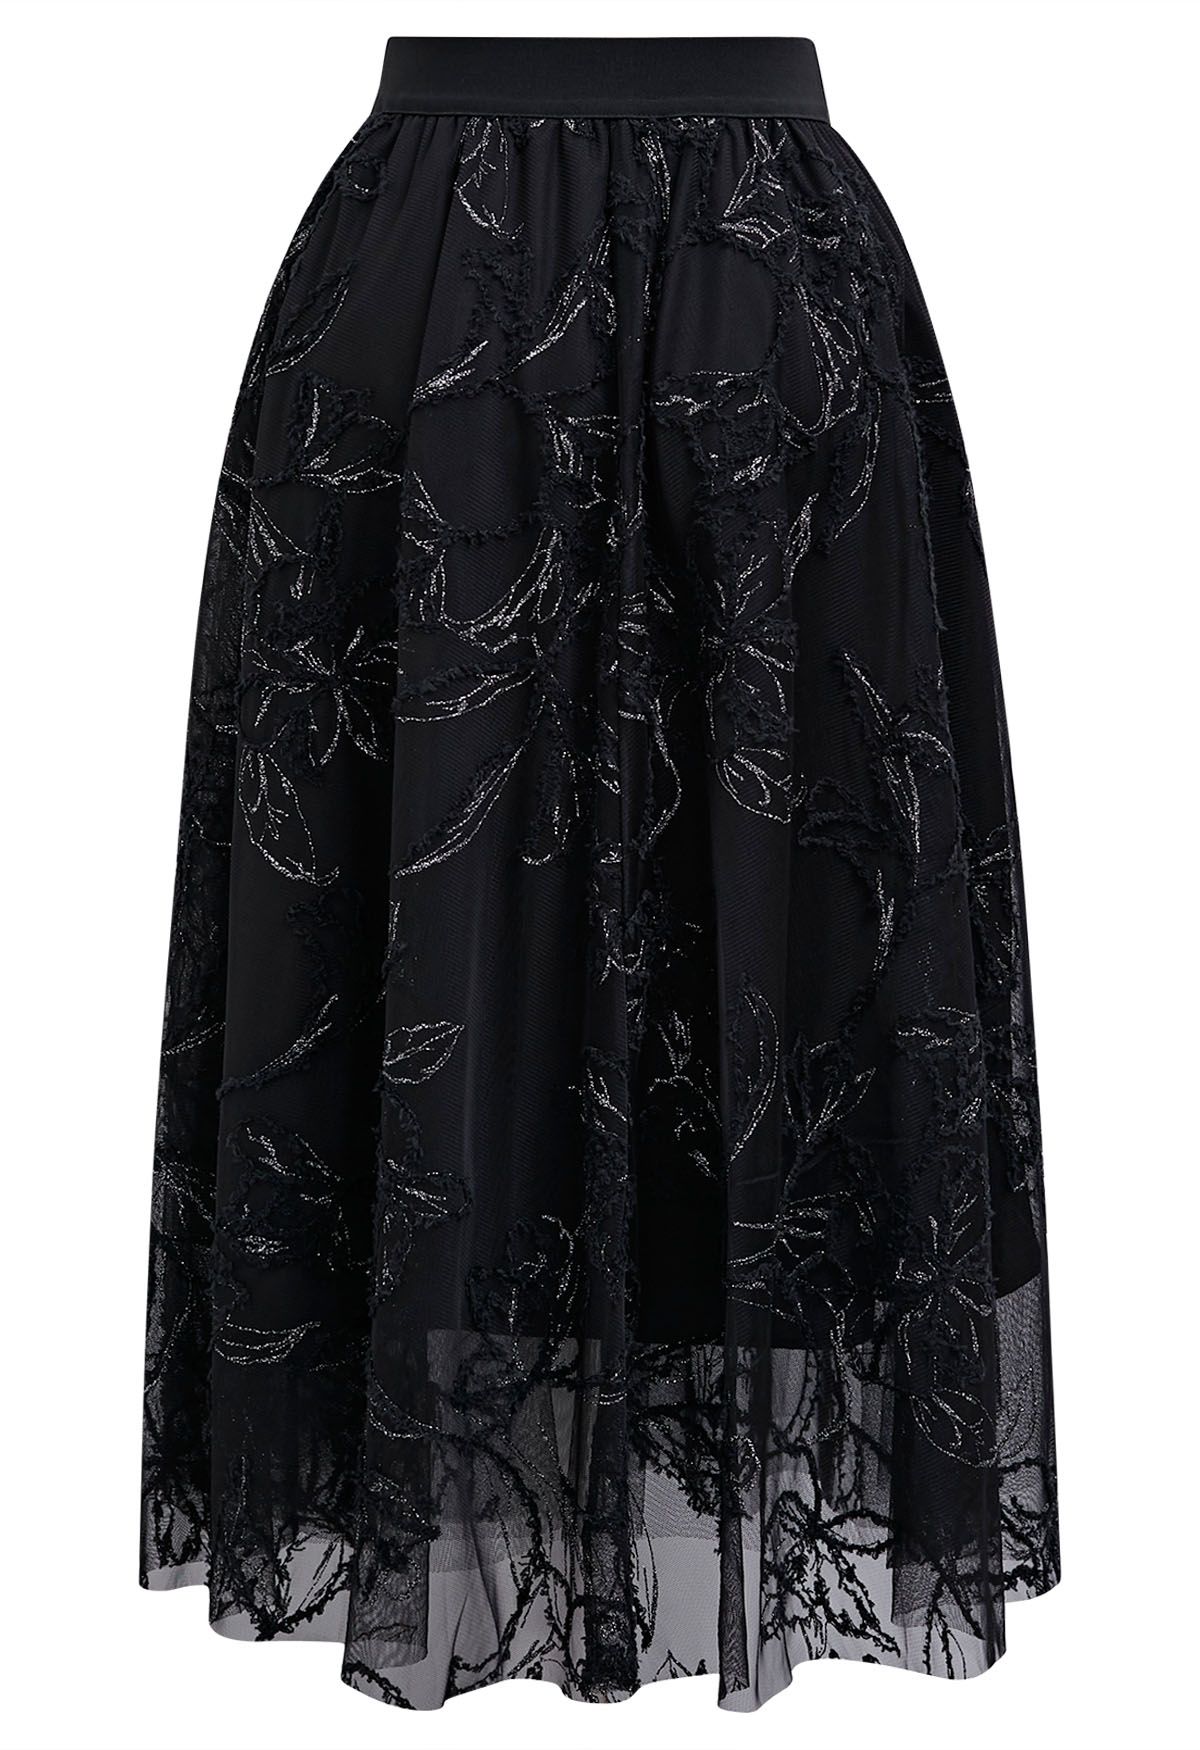 Metallic Thread Fuzzy Floral Mesh Midi Skirt in Black